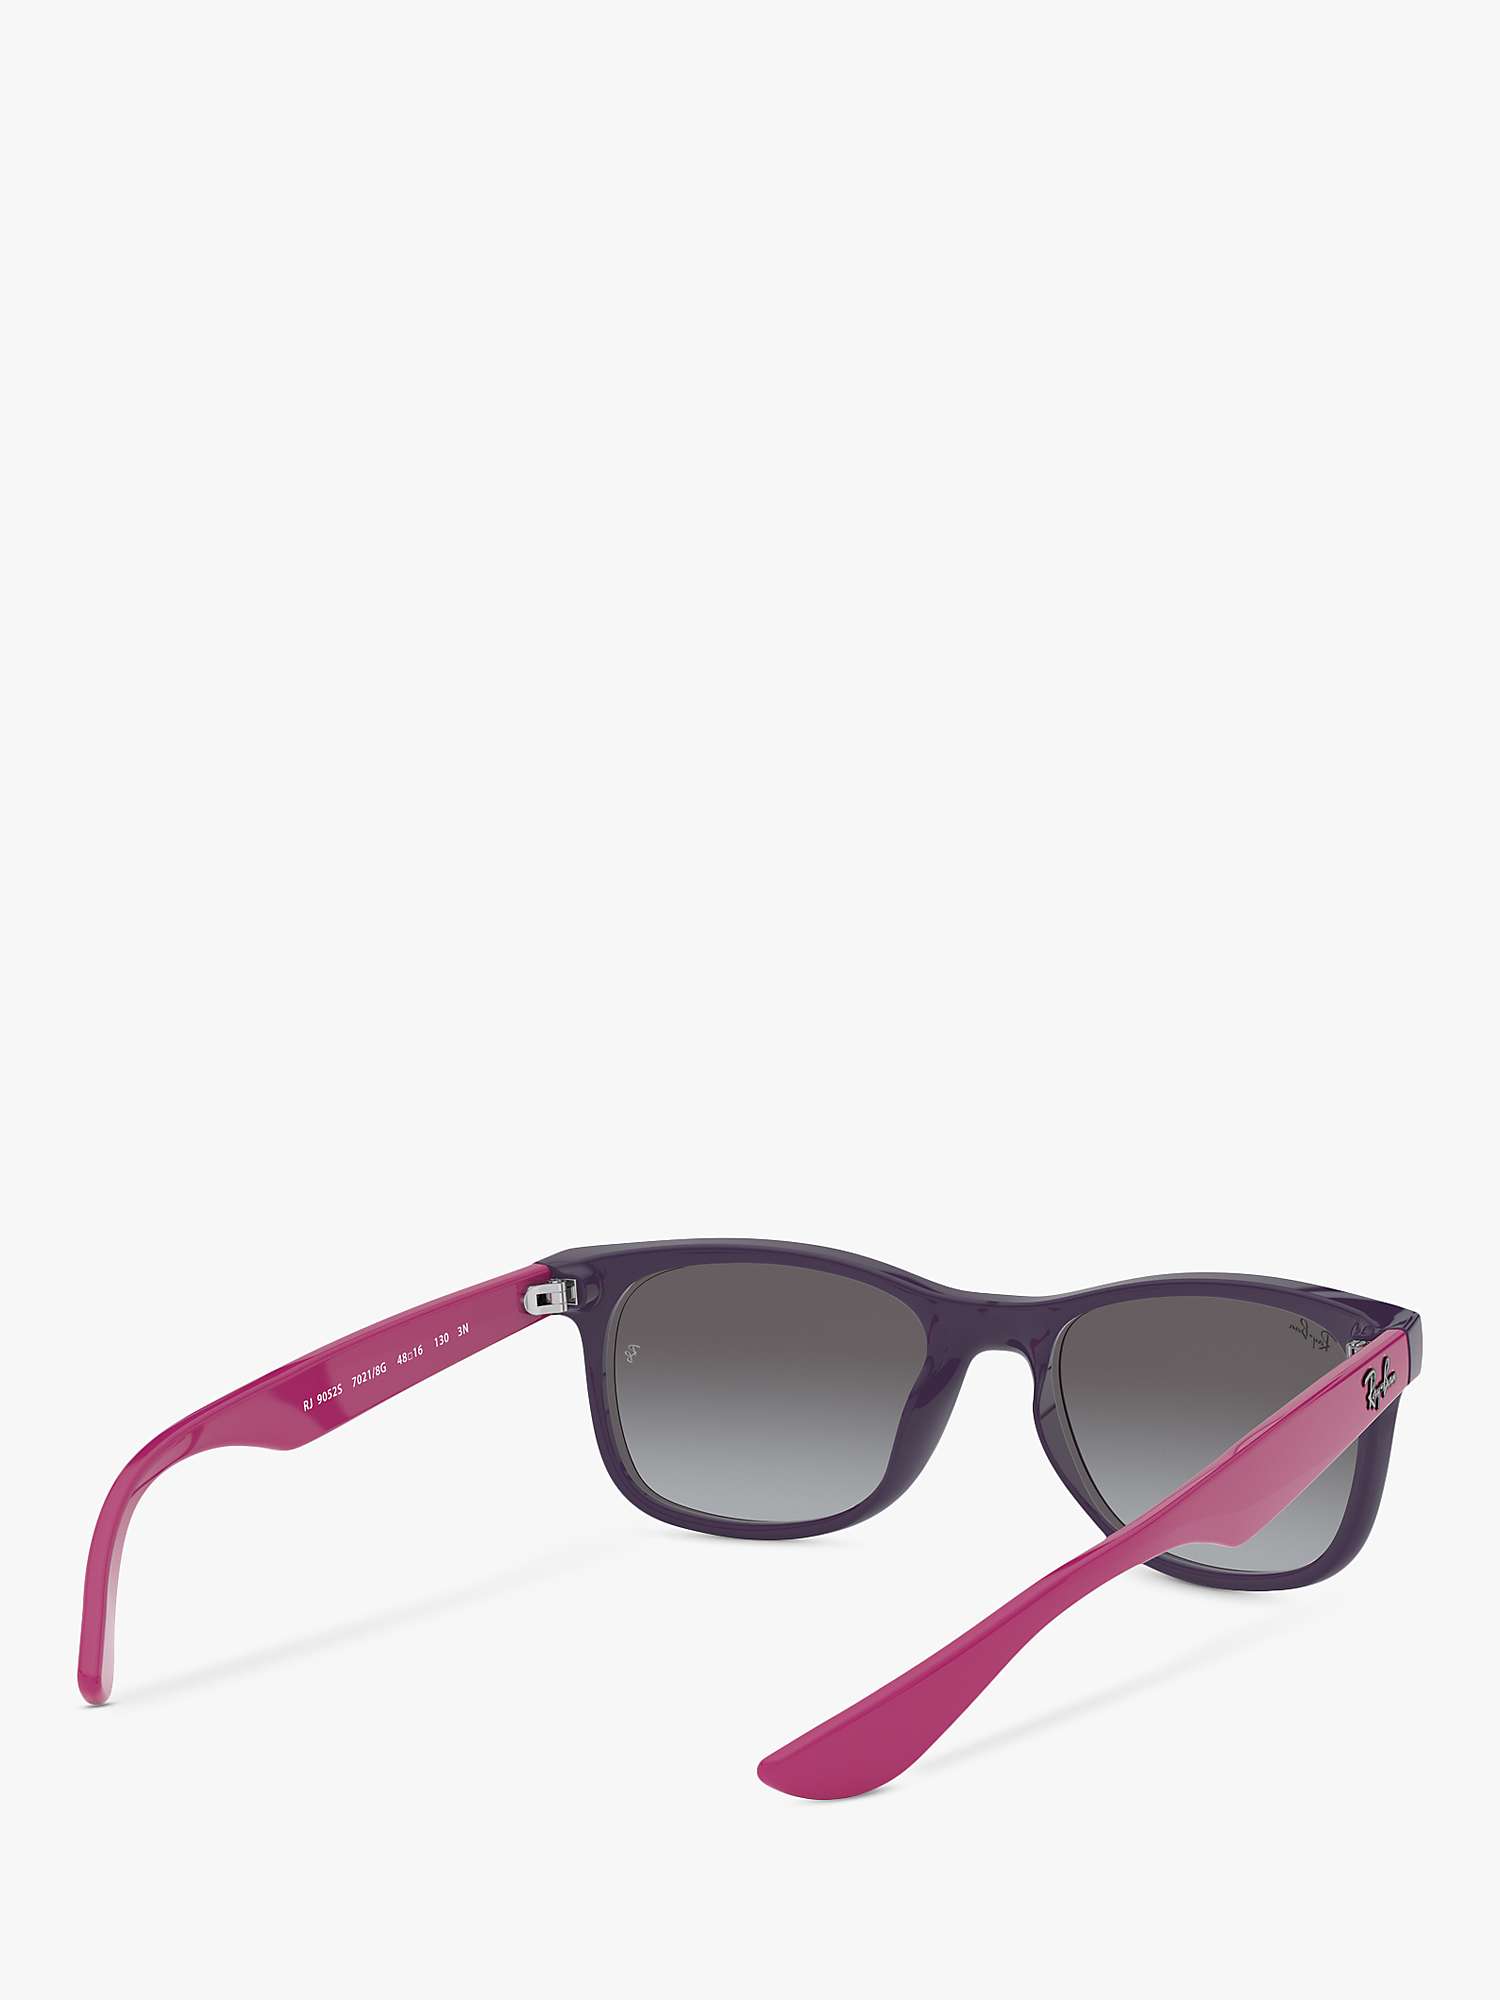 Buy Ray-Ban Junior RJ9052S Unisex Wayfarer Sunglasses, Violet/Grey Gradient Online at johnlewis.com